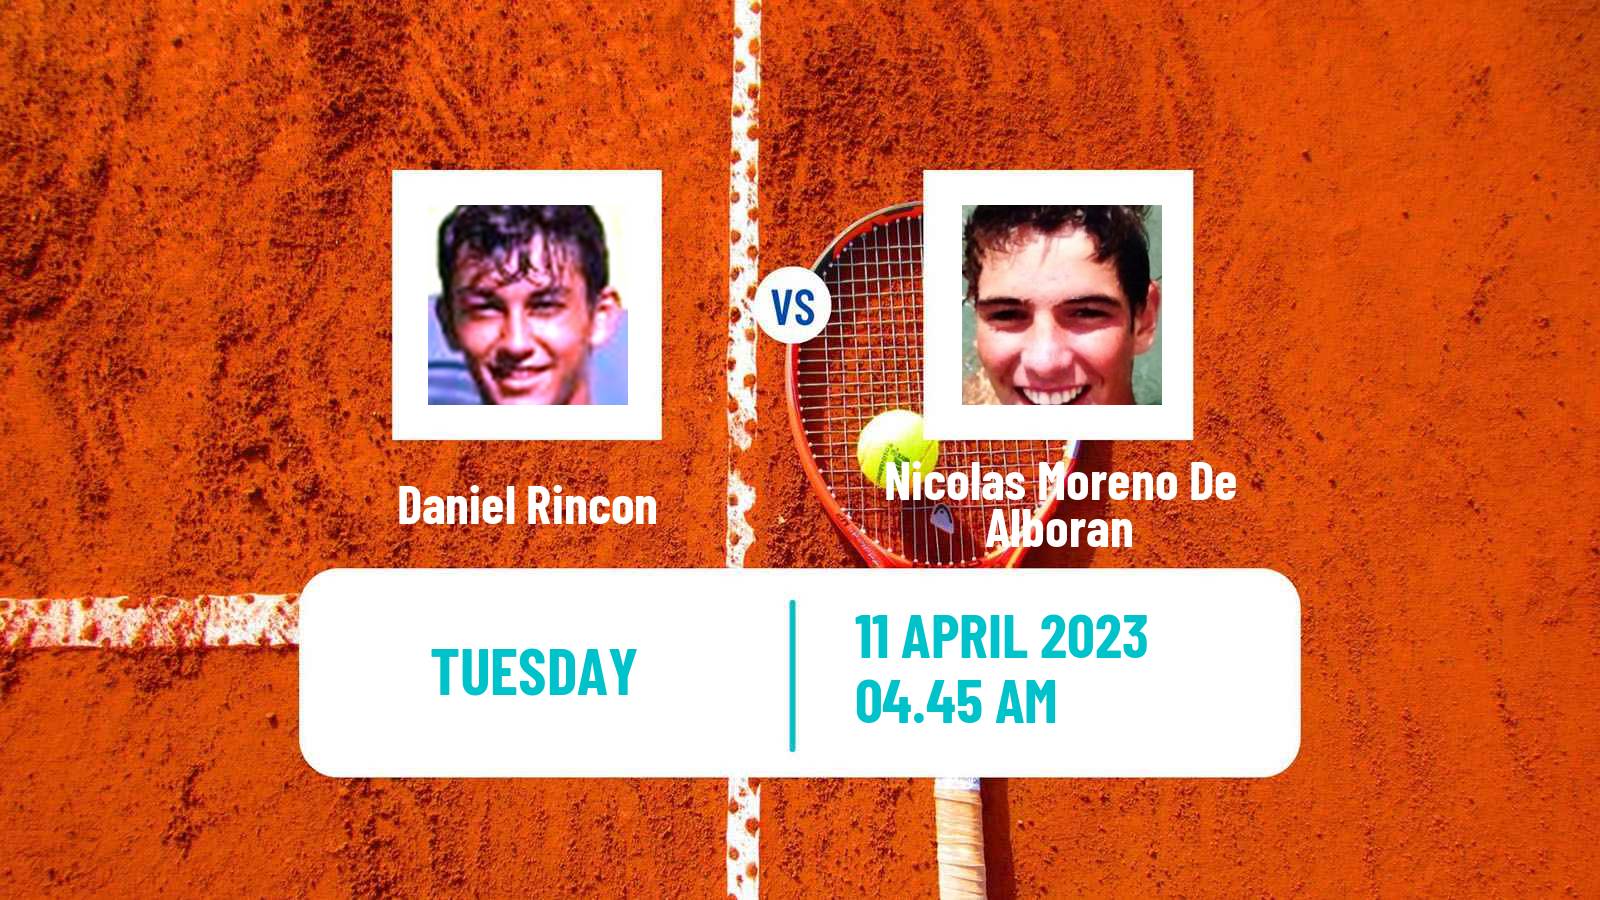 Tennis ATP Challenger Daniel Rincon - Nicolas Moreno De Alboran